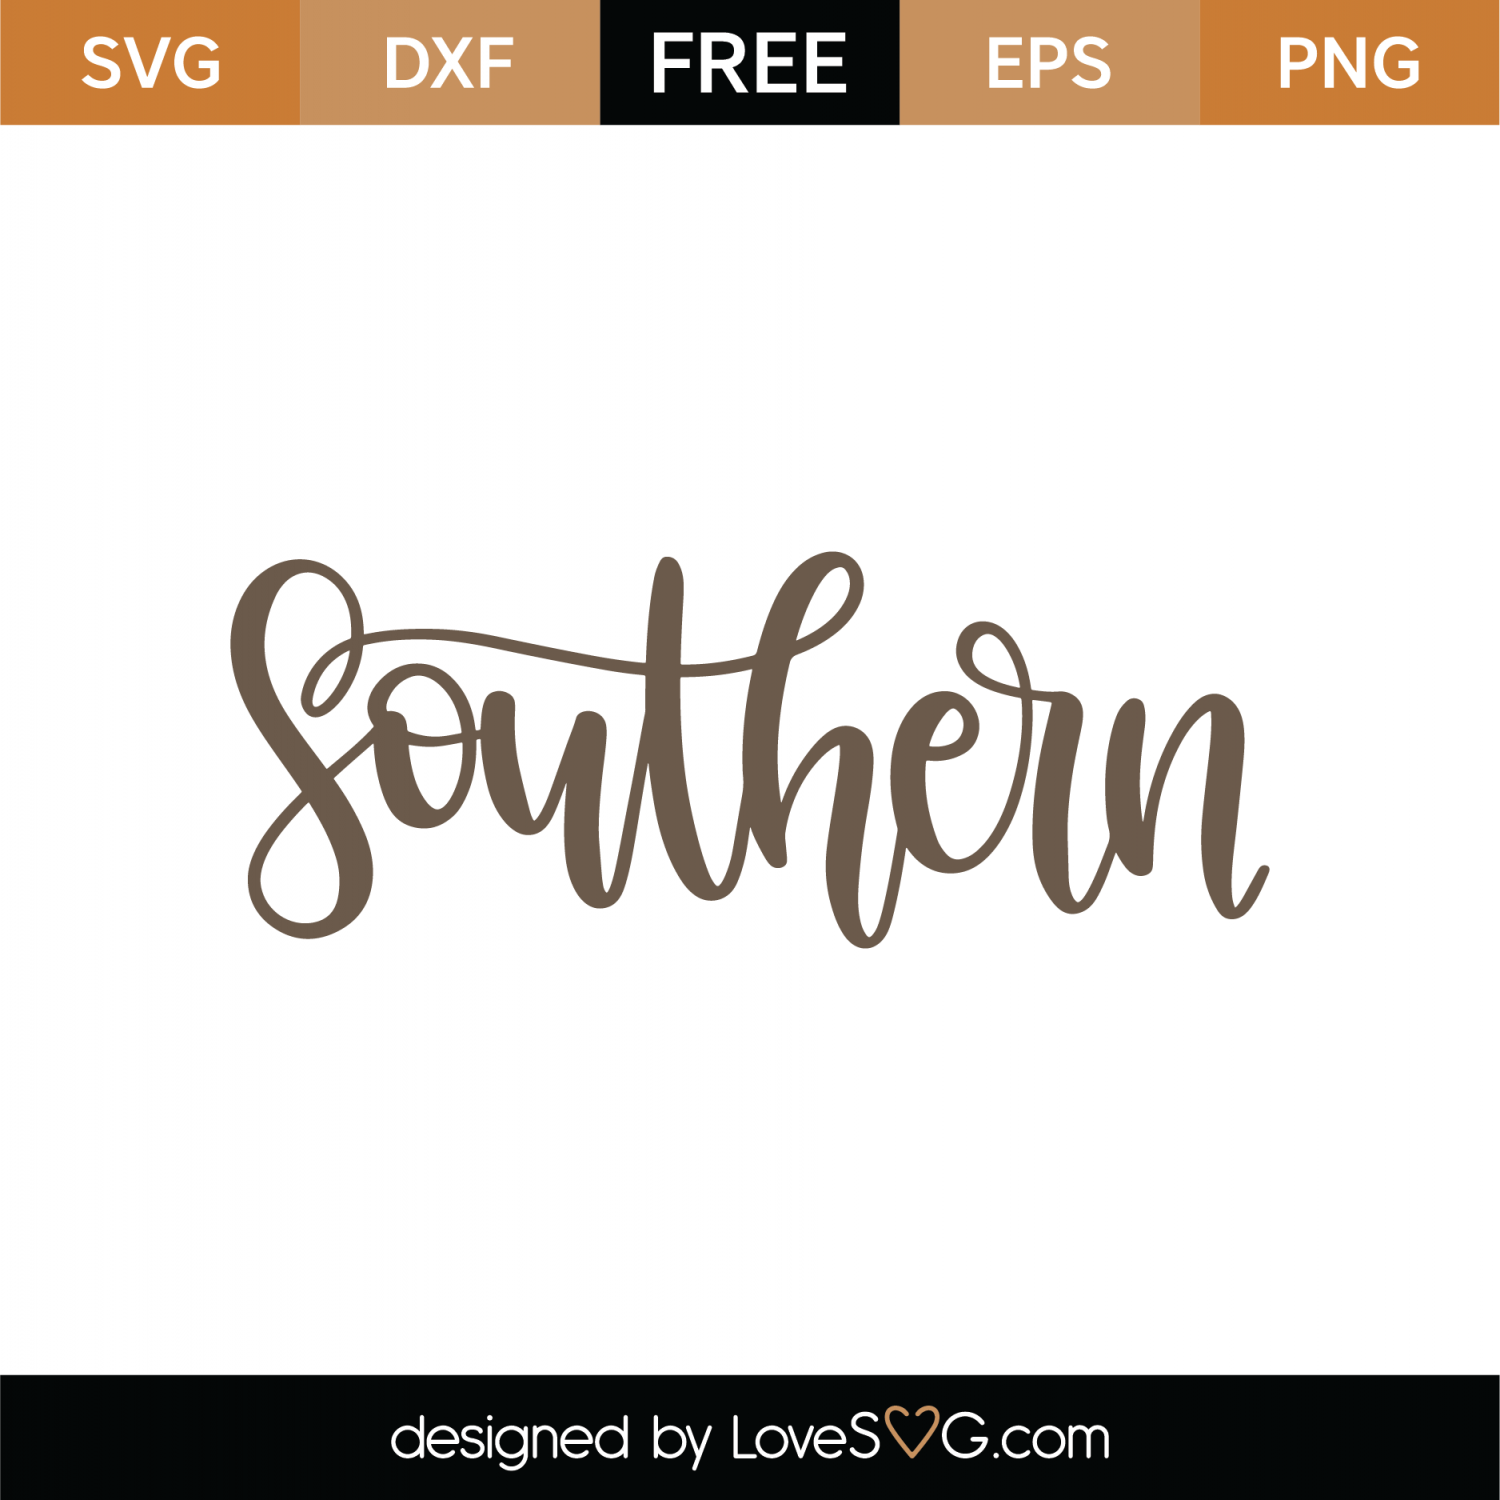 Free Southern SVG Cut File | Lovesvg.com